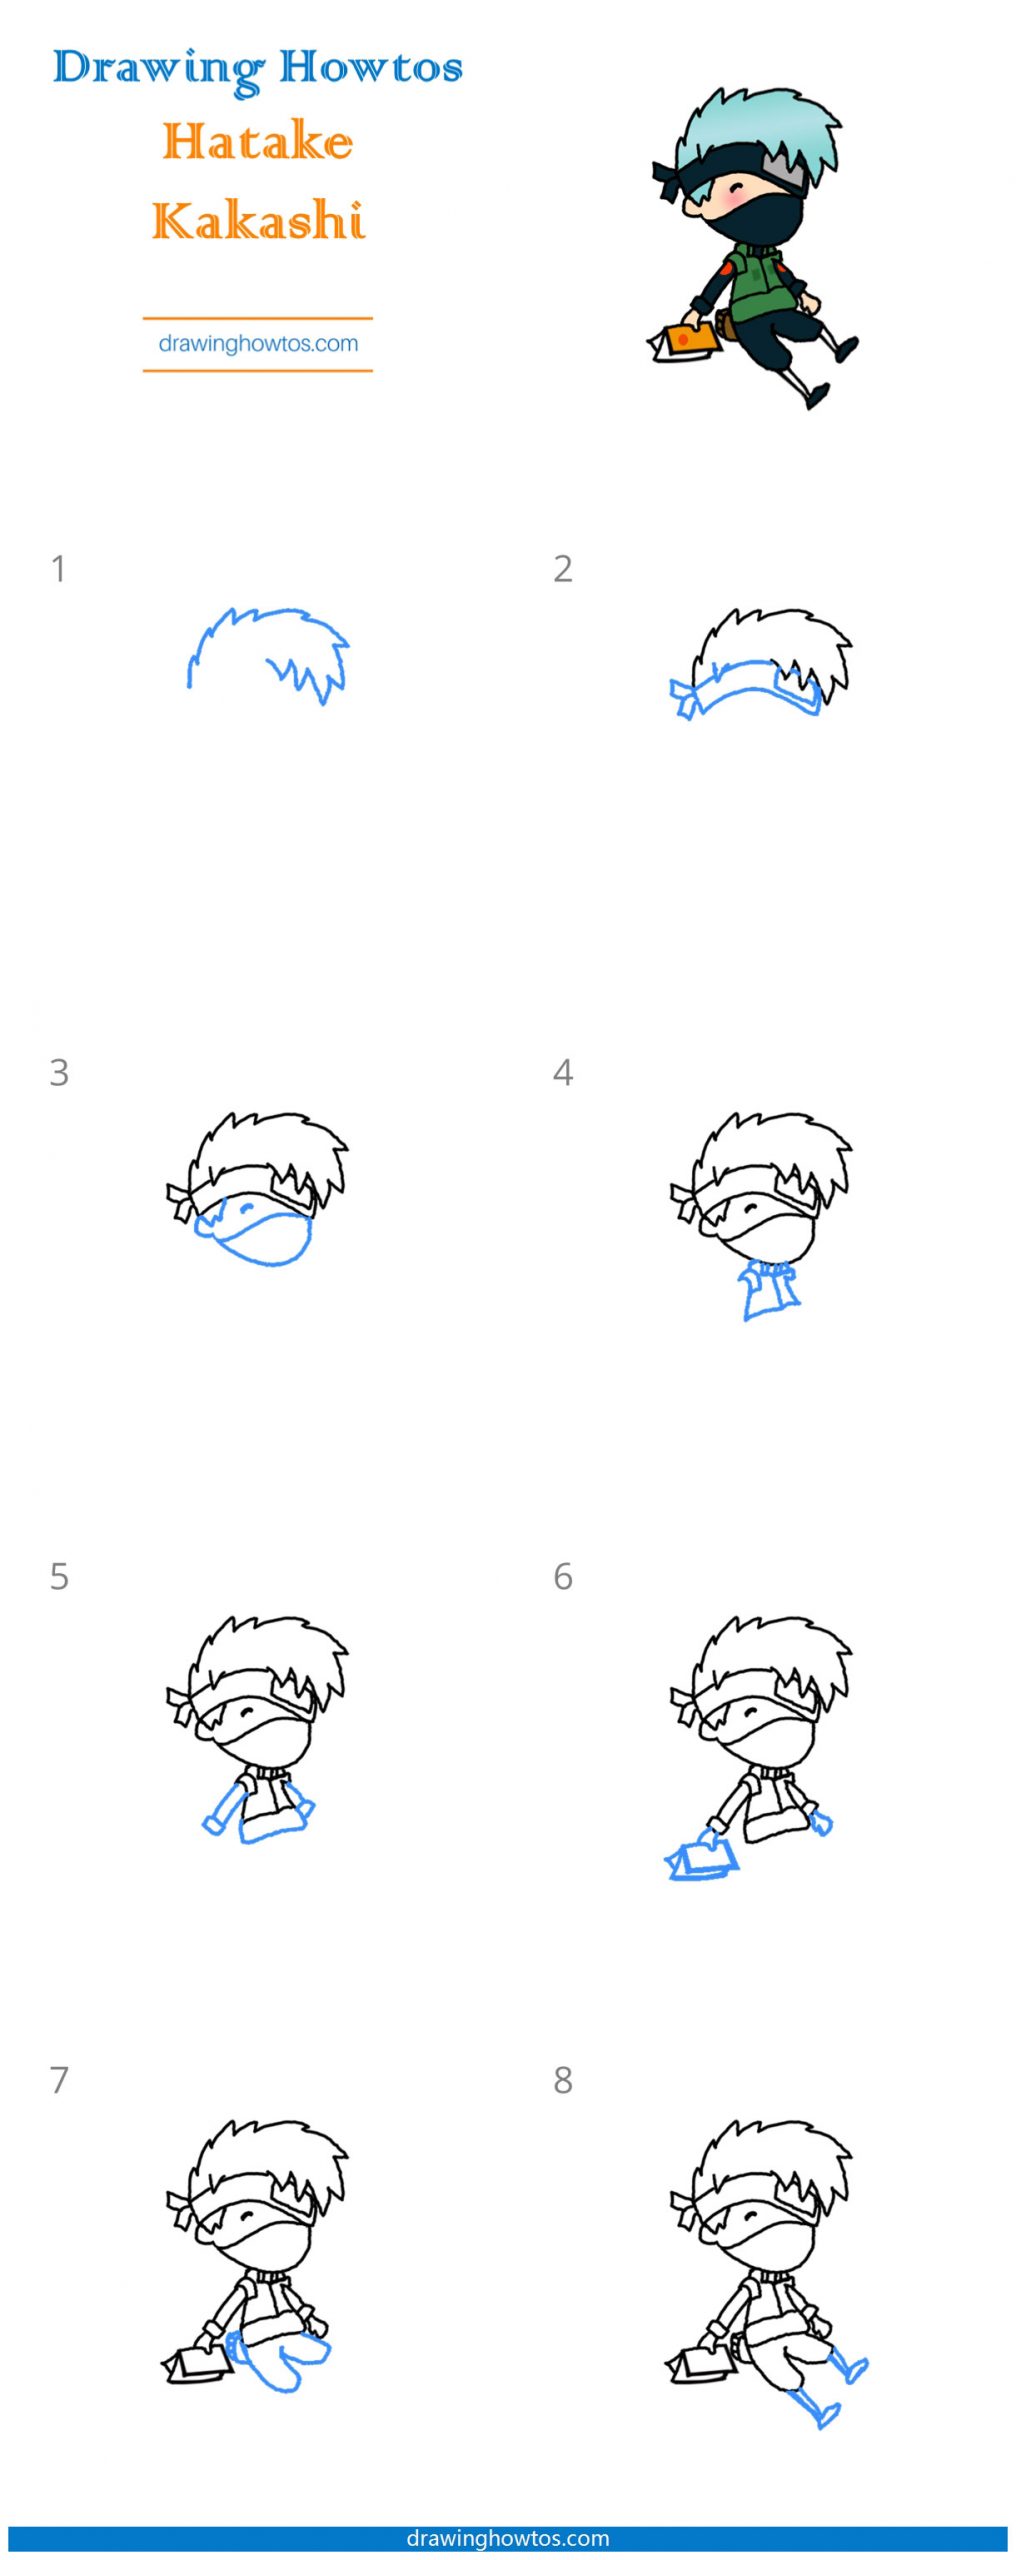 How to Draw Hatake Kakashi Step by Step